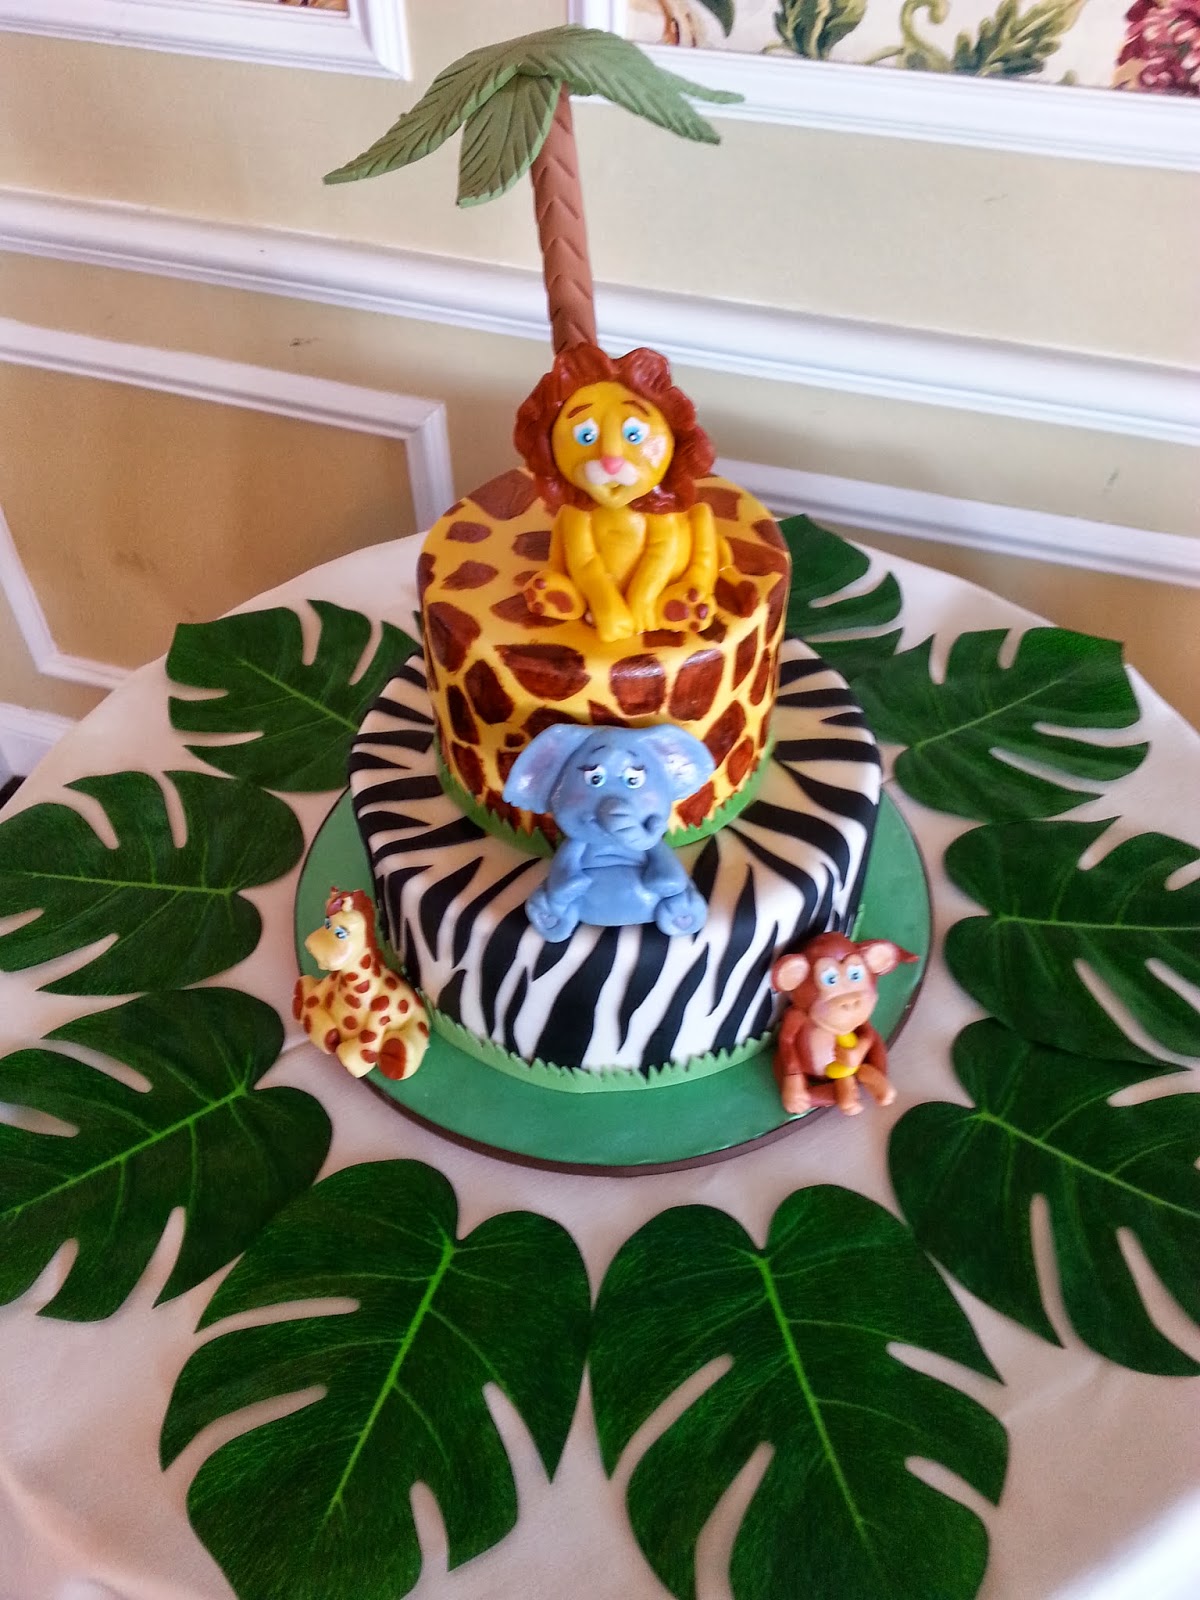 Jungle Themed Baby Shower Centerpiece Ideas A jungle themed cake,